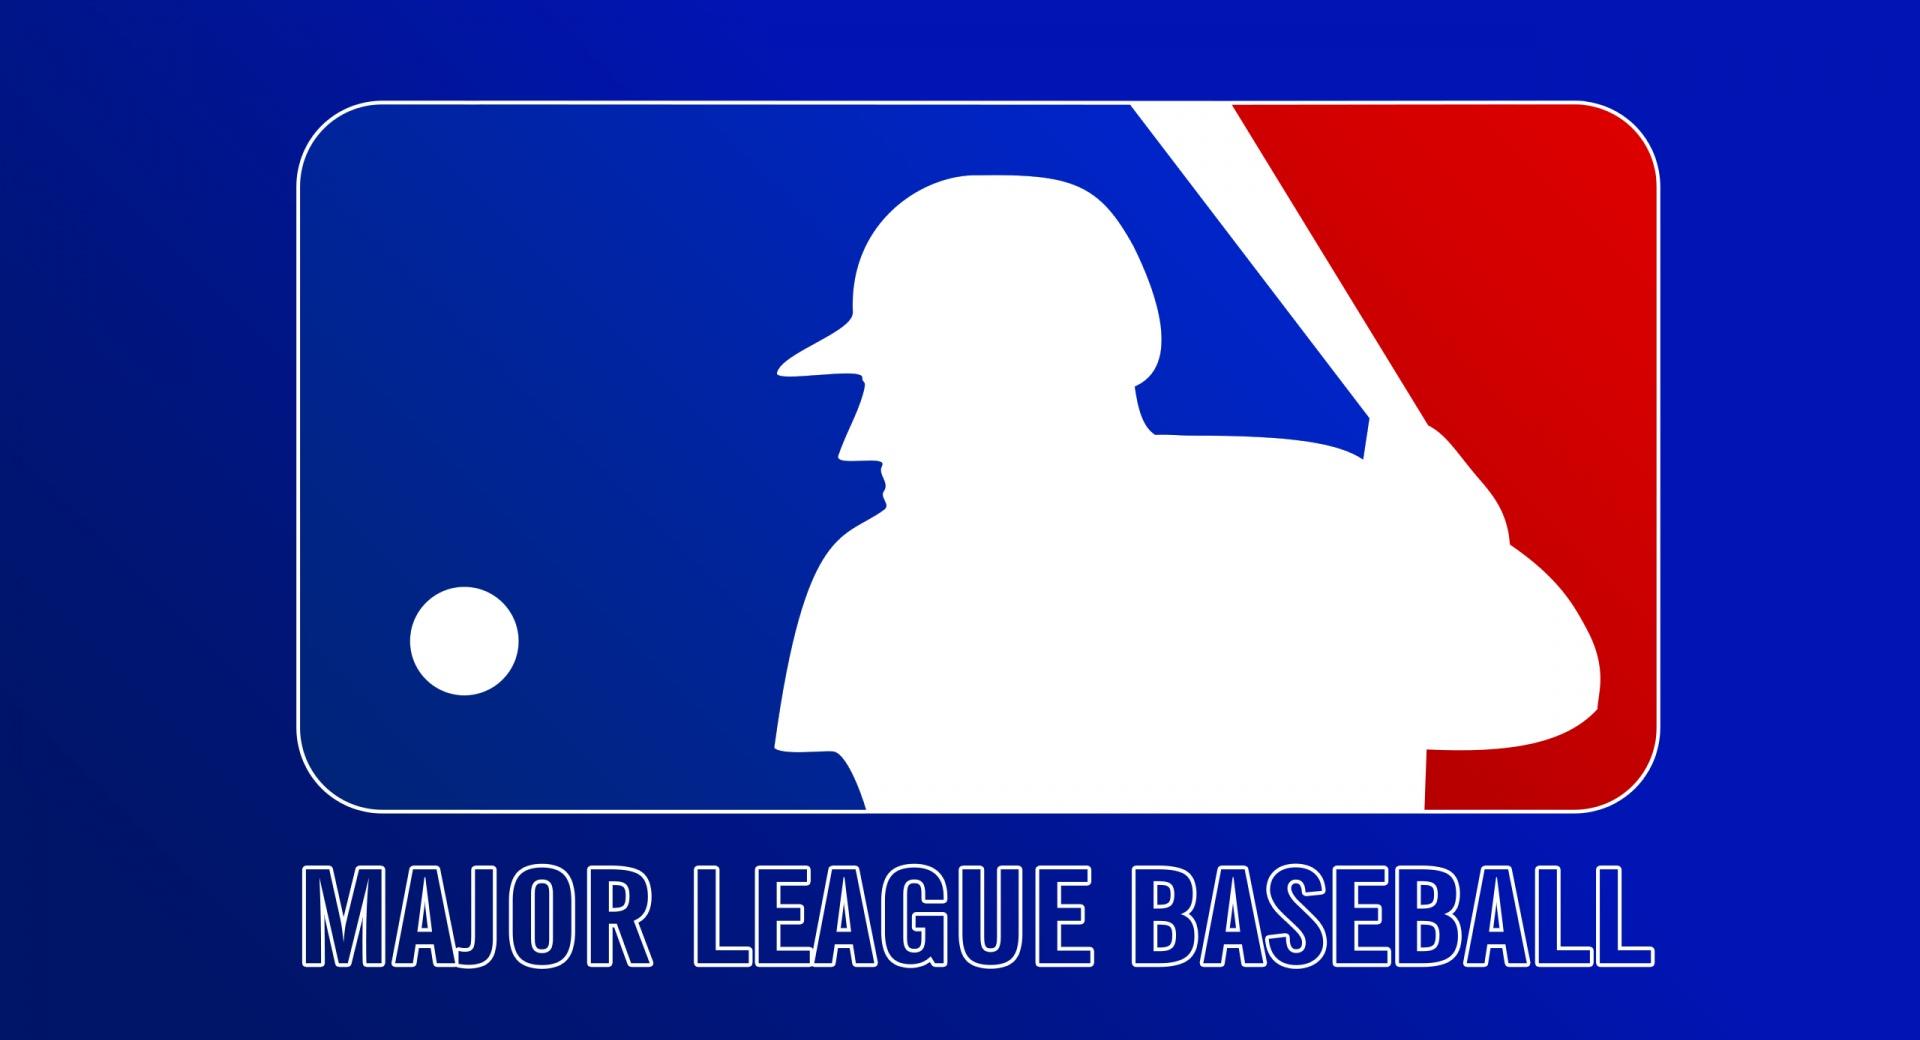 Major League Baseball (MLB) at 2048 x 2048 iPad size wallpapers HD quality